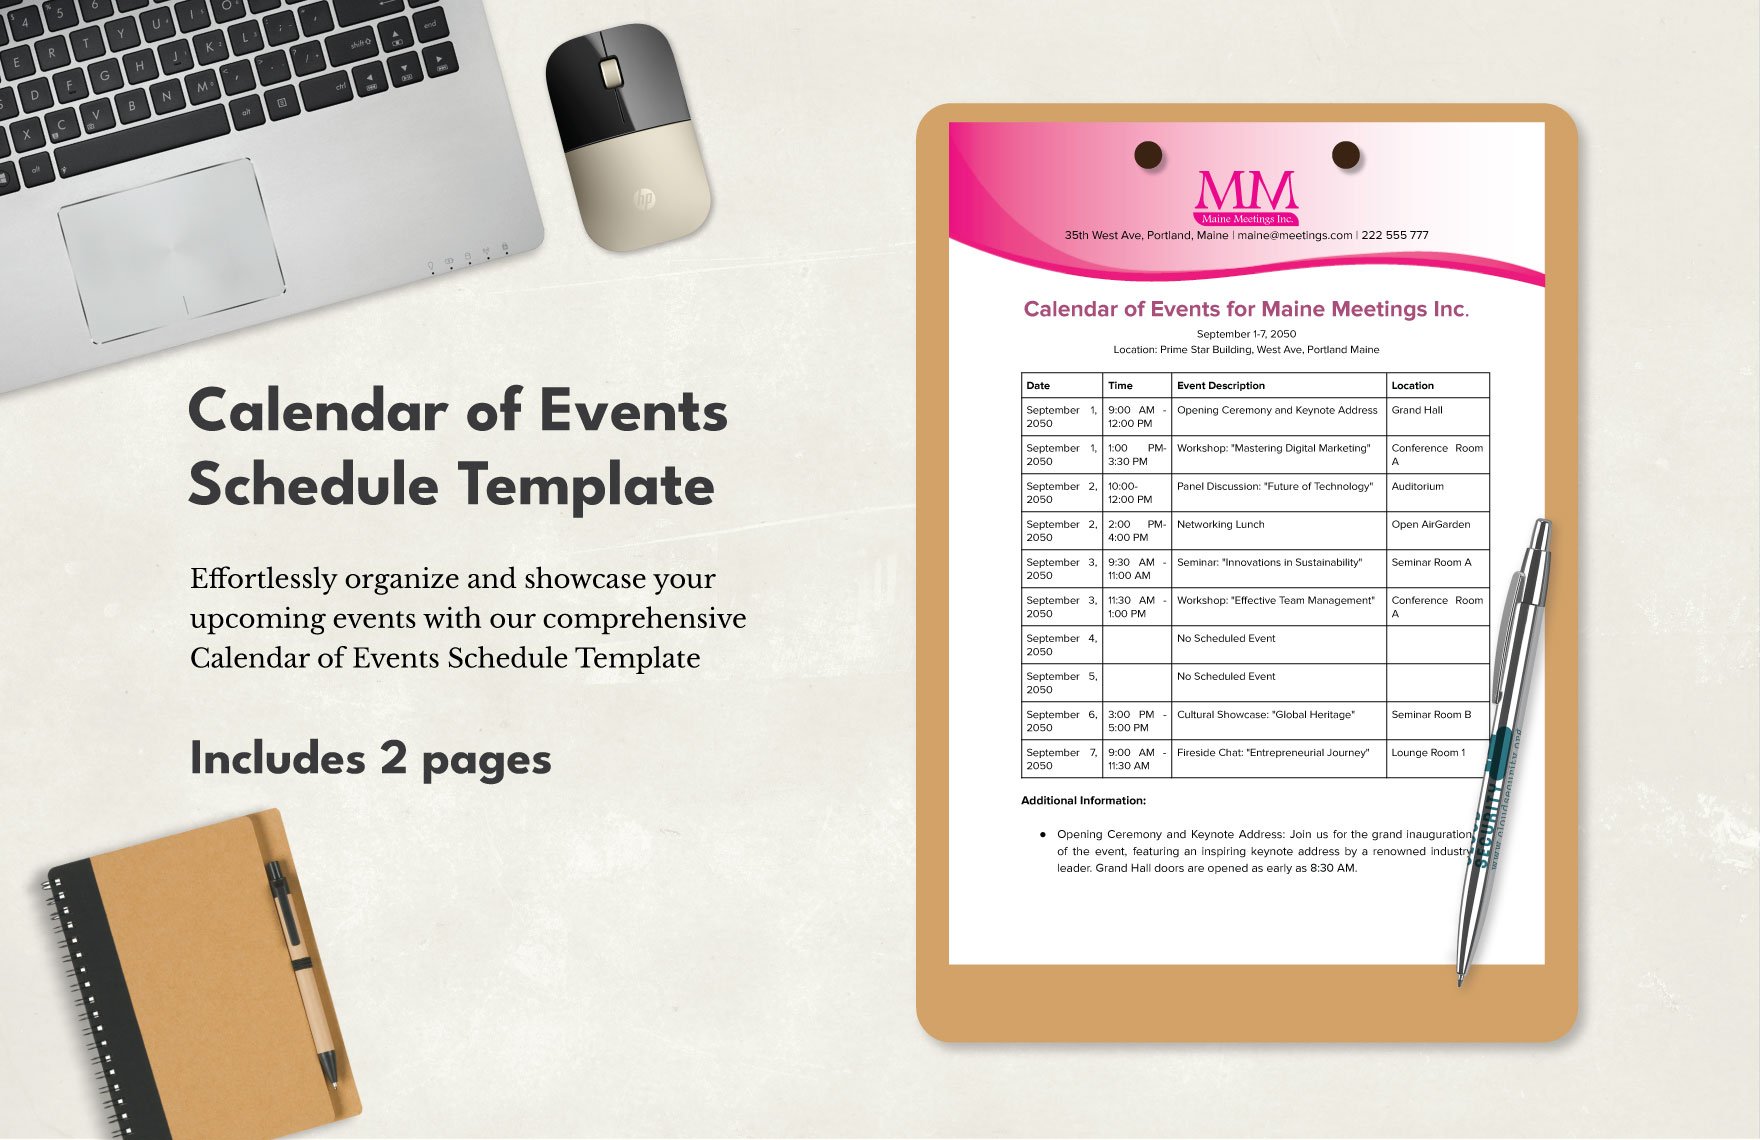 Calendar of Events Schedule Template